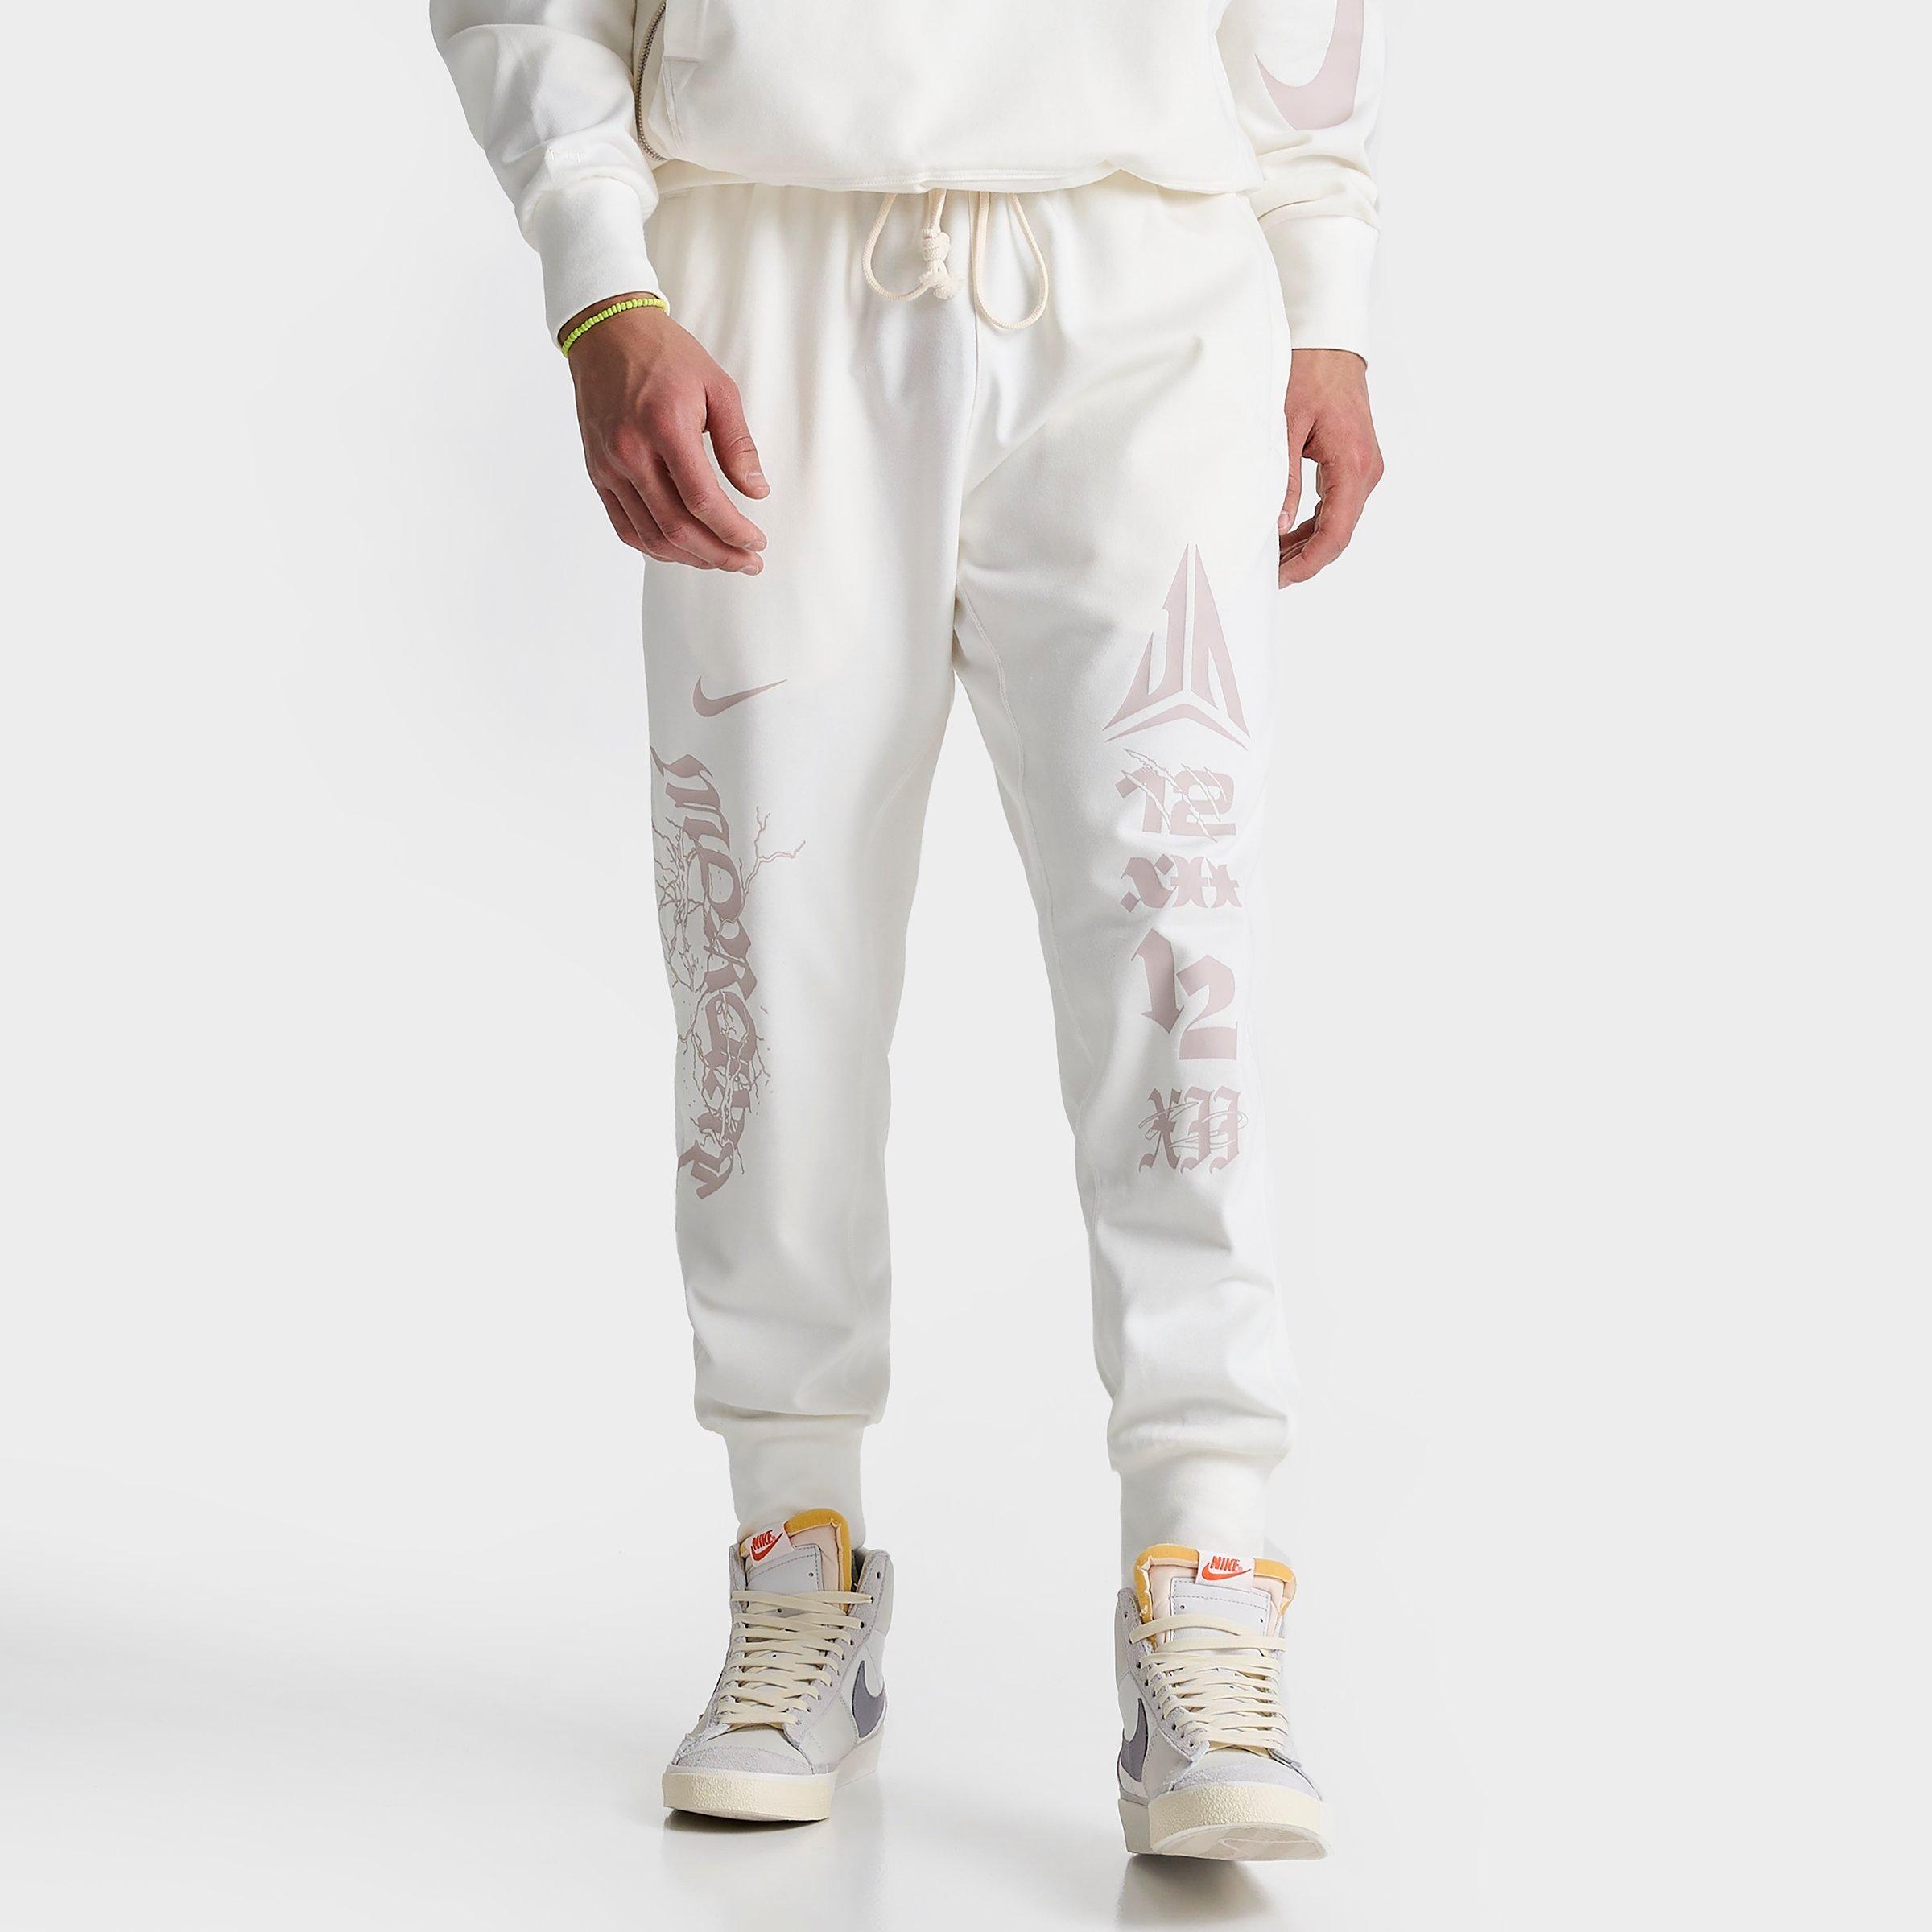 Nike Men's Ja Standard Issue Dri-fit Jogger Basketball Pants In White